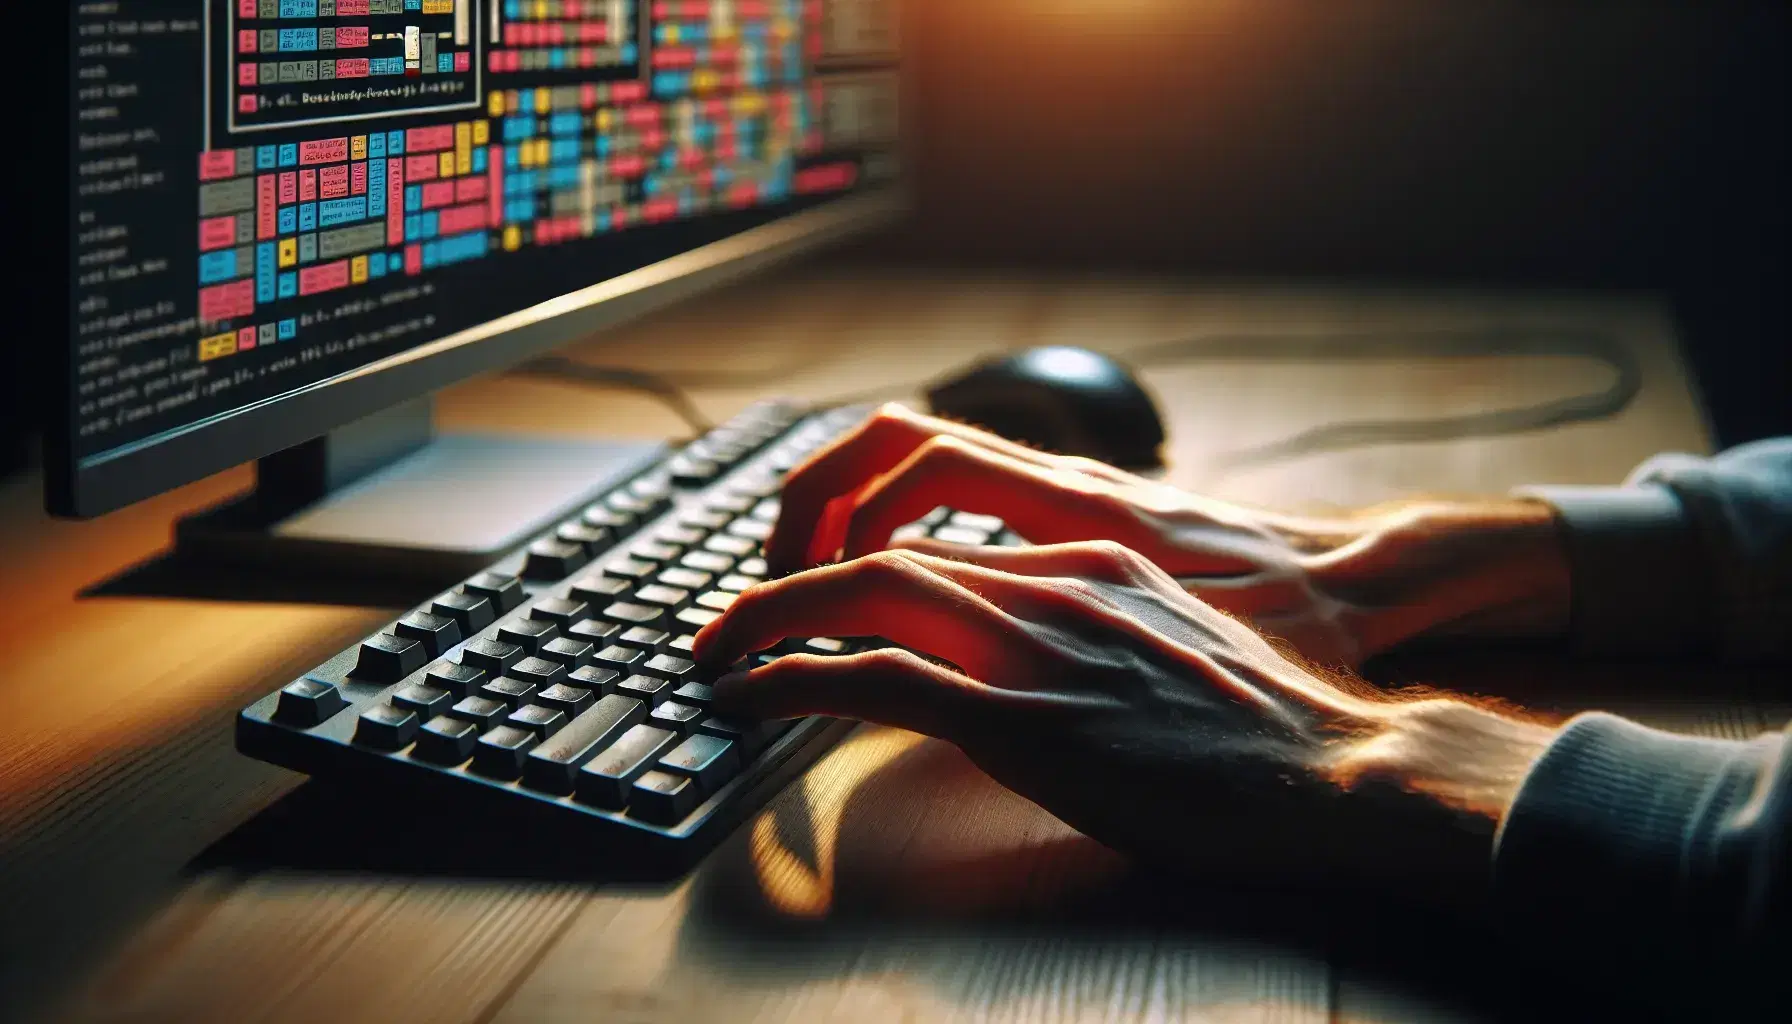 Manos tecleando en teclado de computadora sobre mesa de madera con monitor mostrando interfaz de programación con bloques de colores.